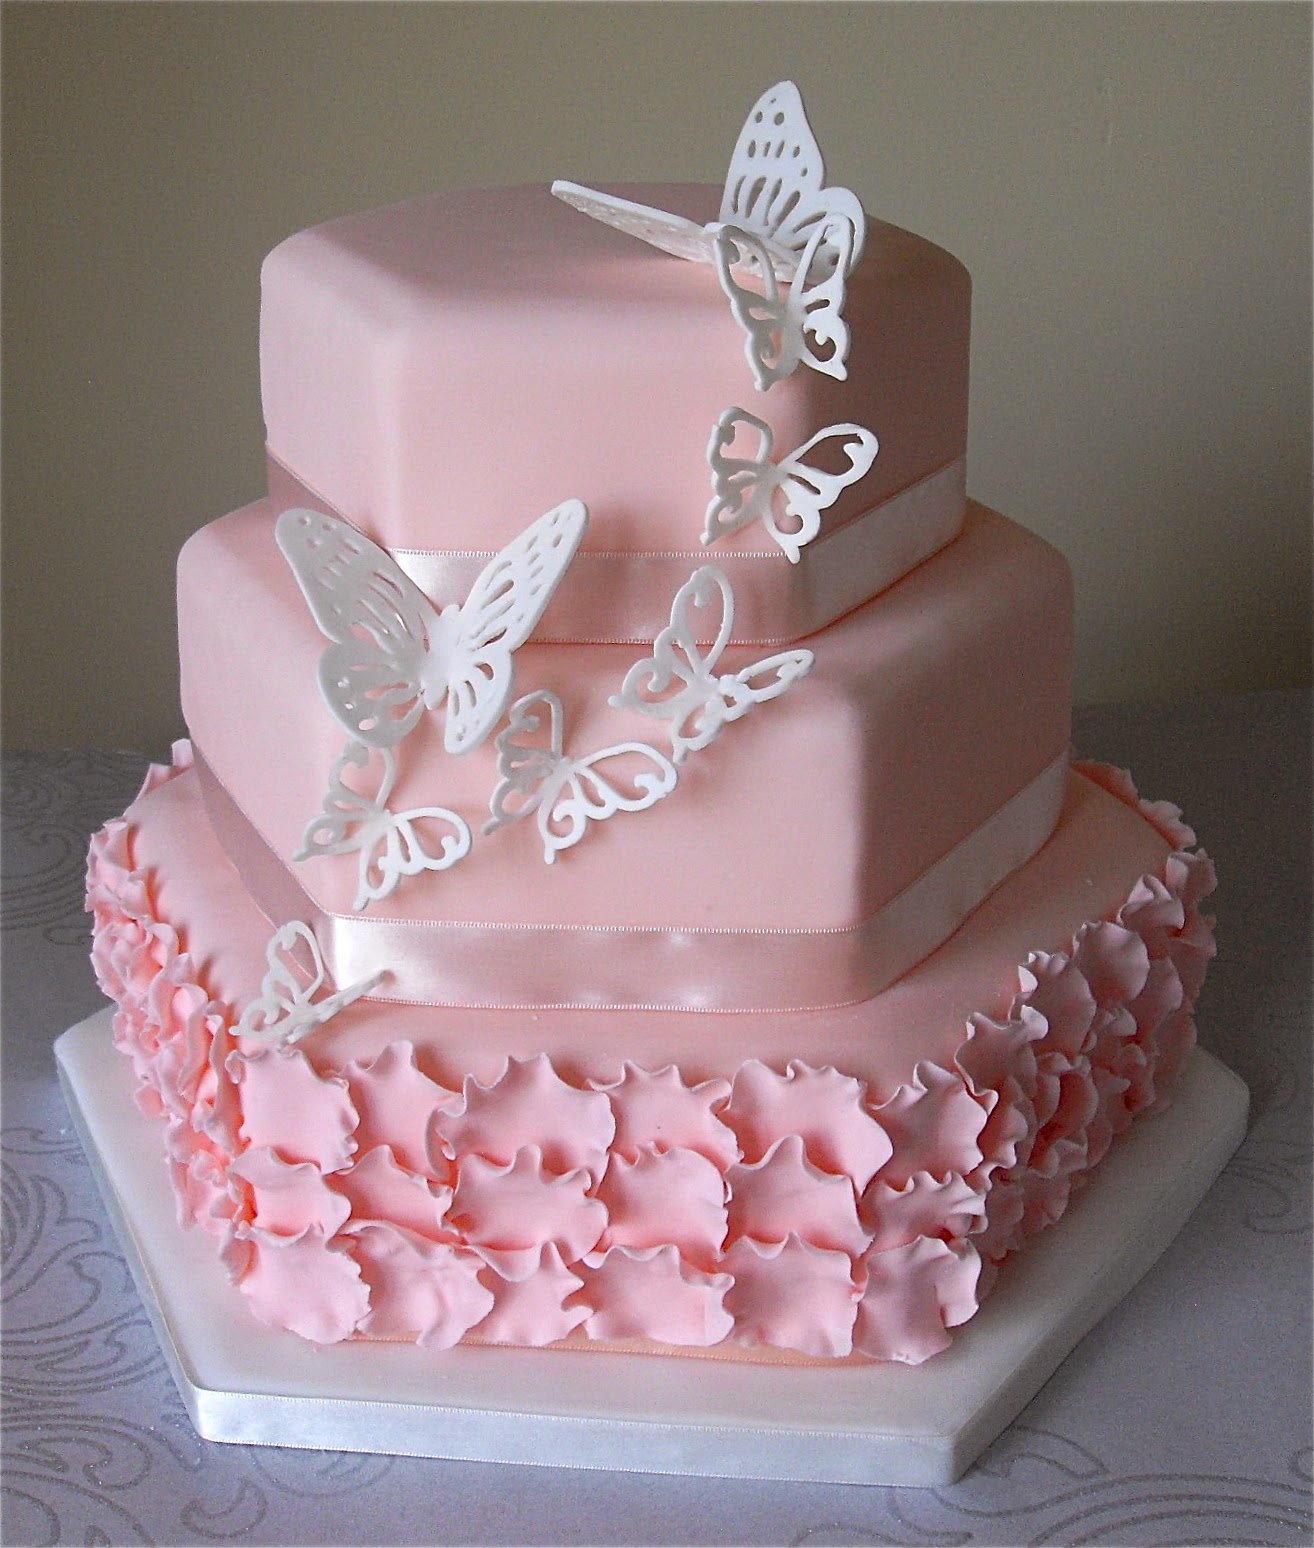 Butterfly wedding cakes pinterest